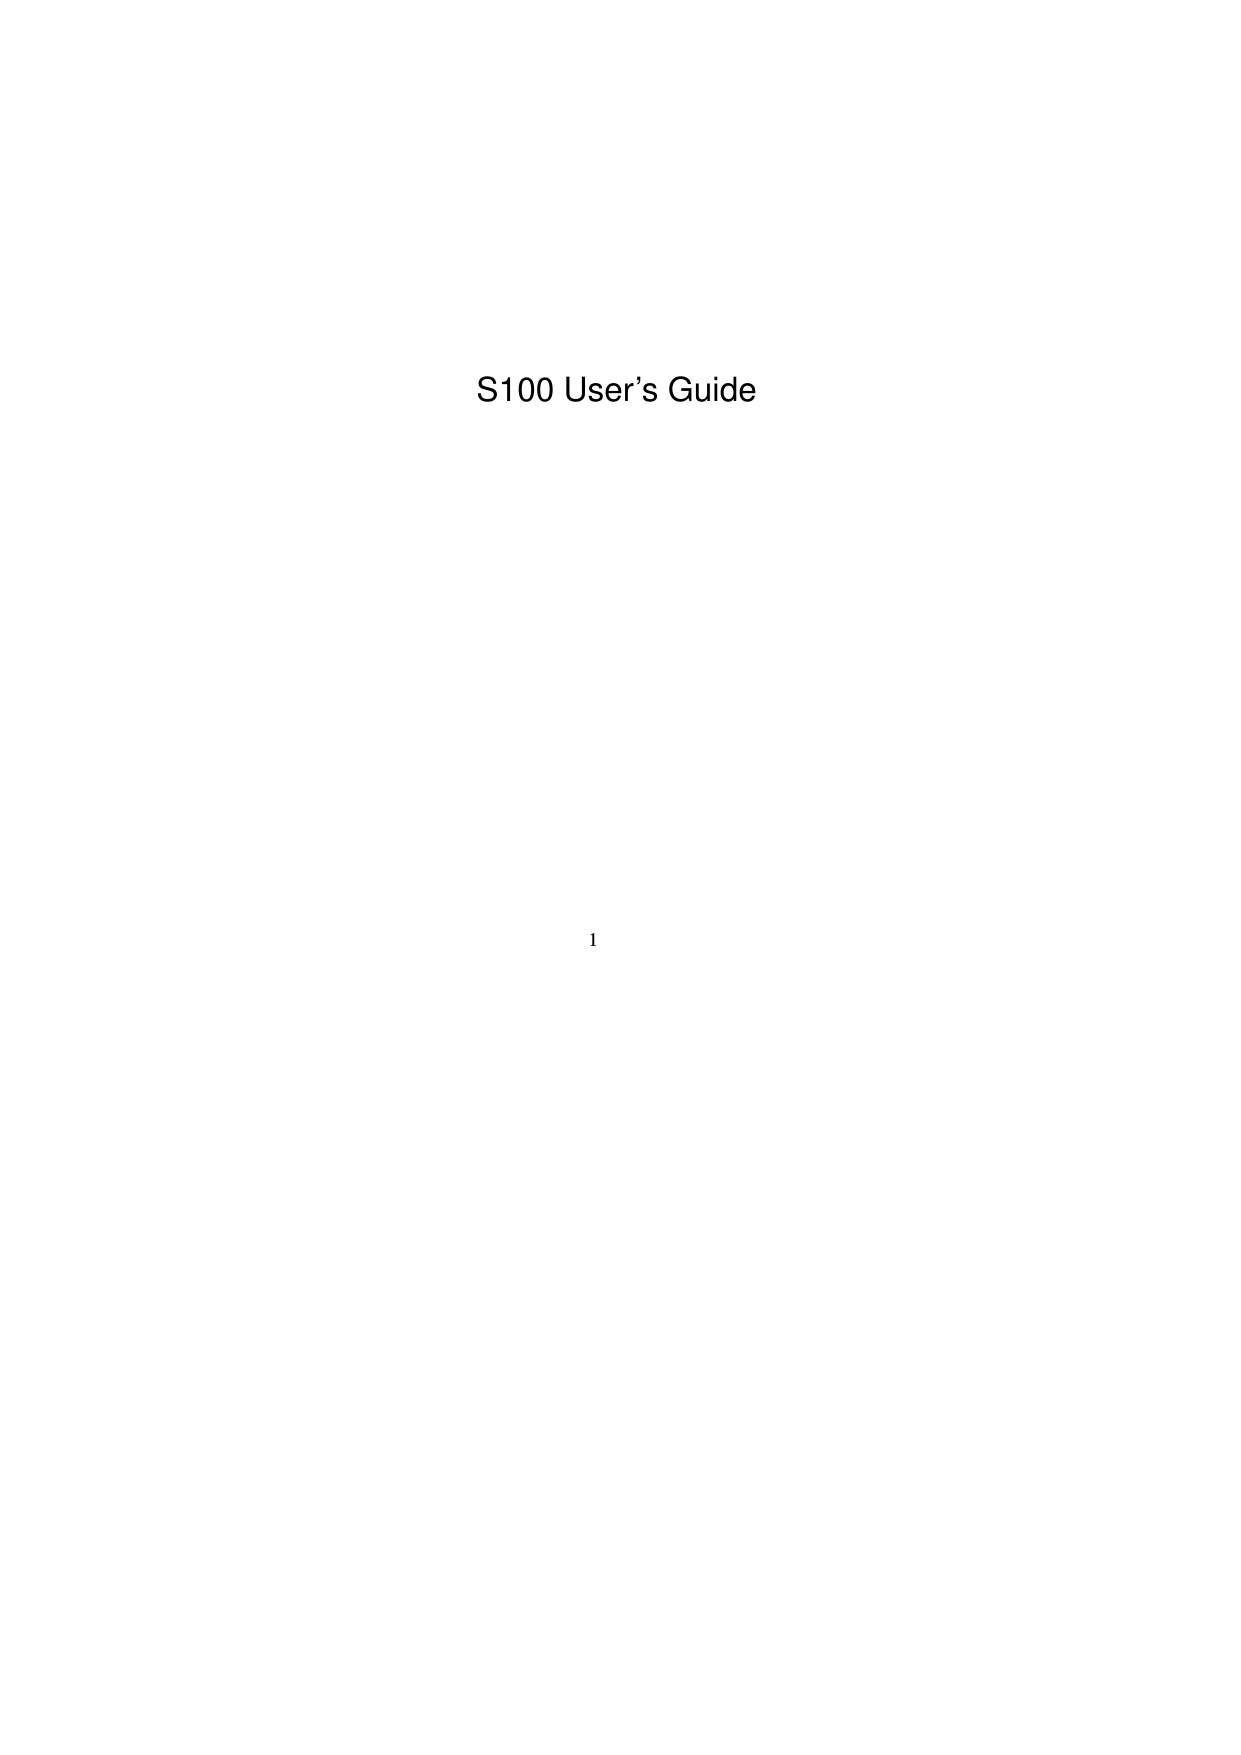 1         S100 User’s Guide  